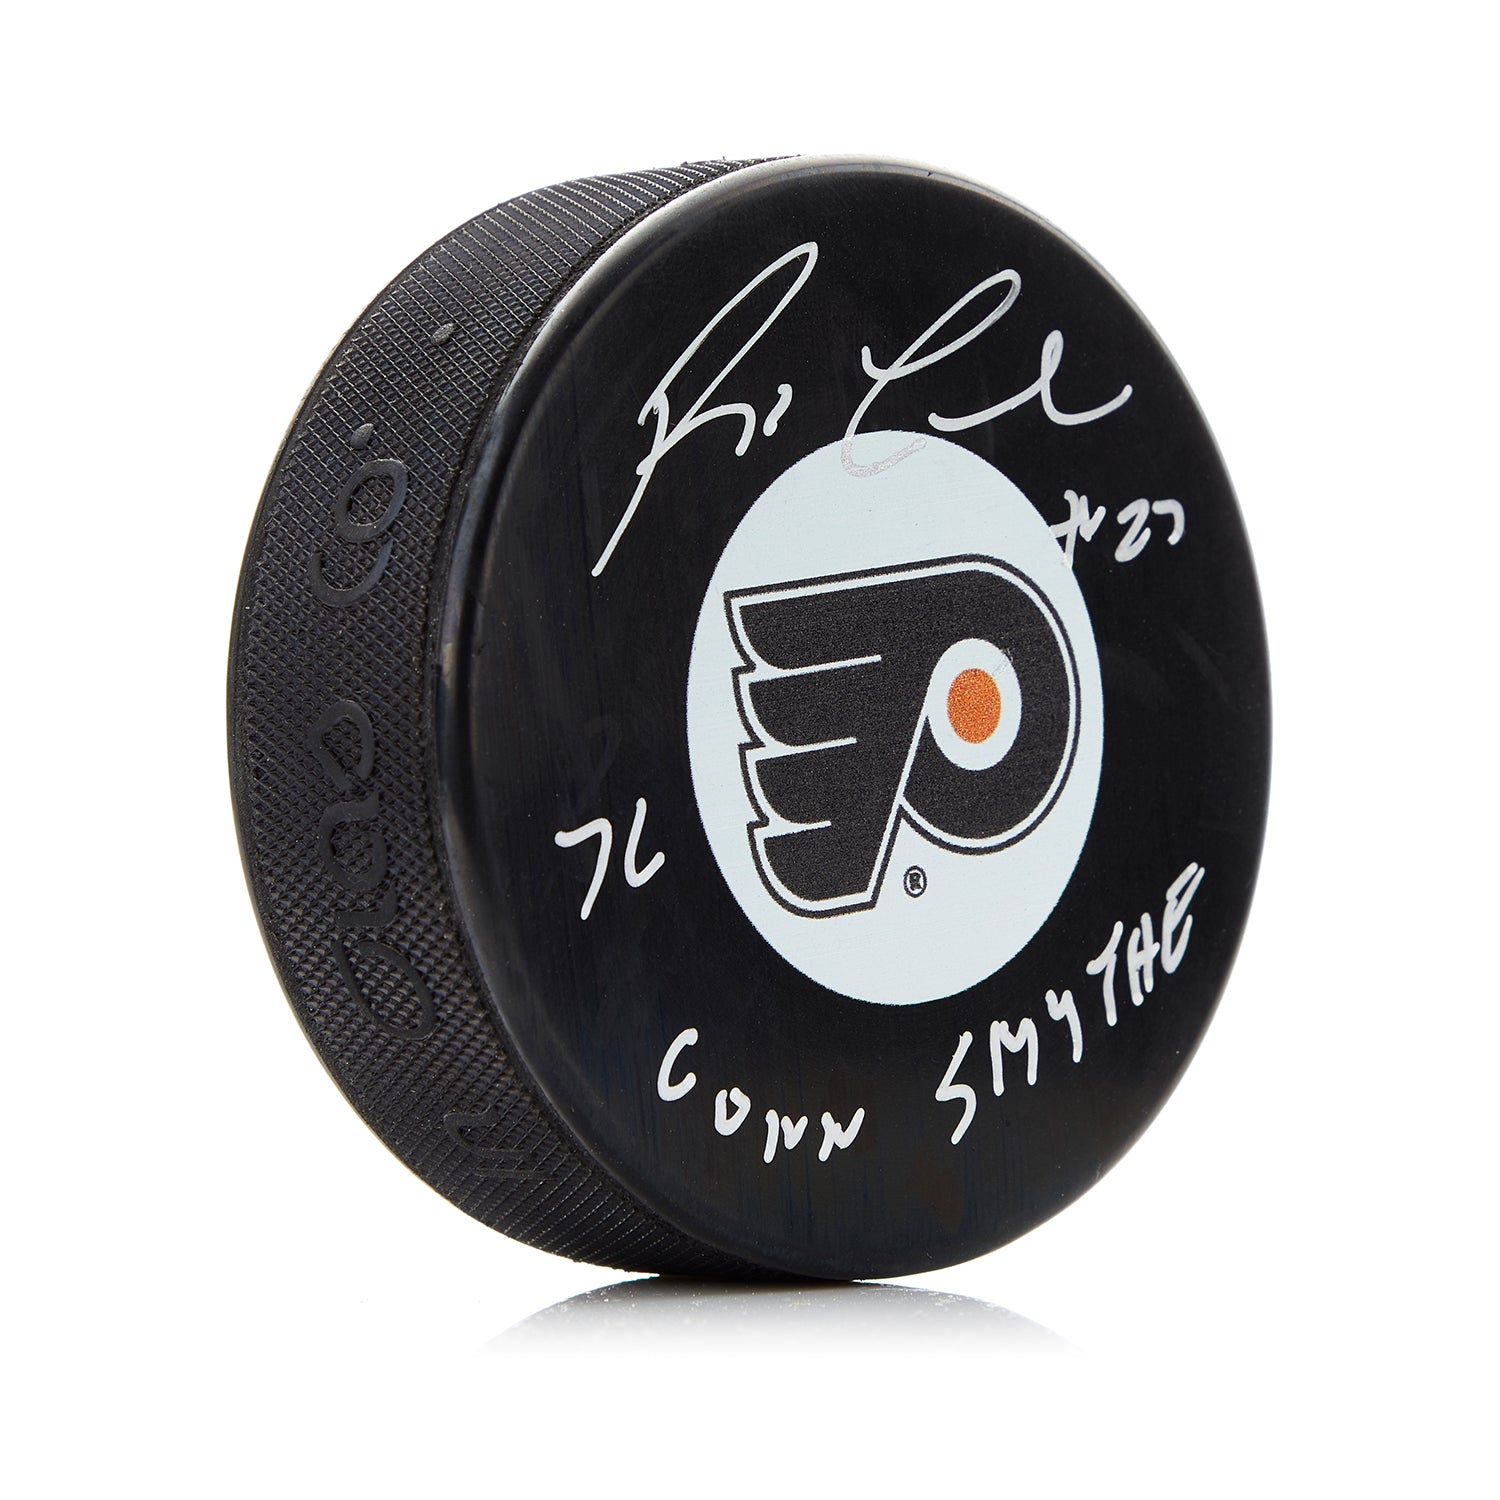 Reggie Leach Autographed Philadelphia Flyers Hockey Puck